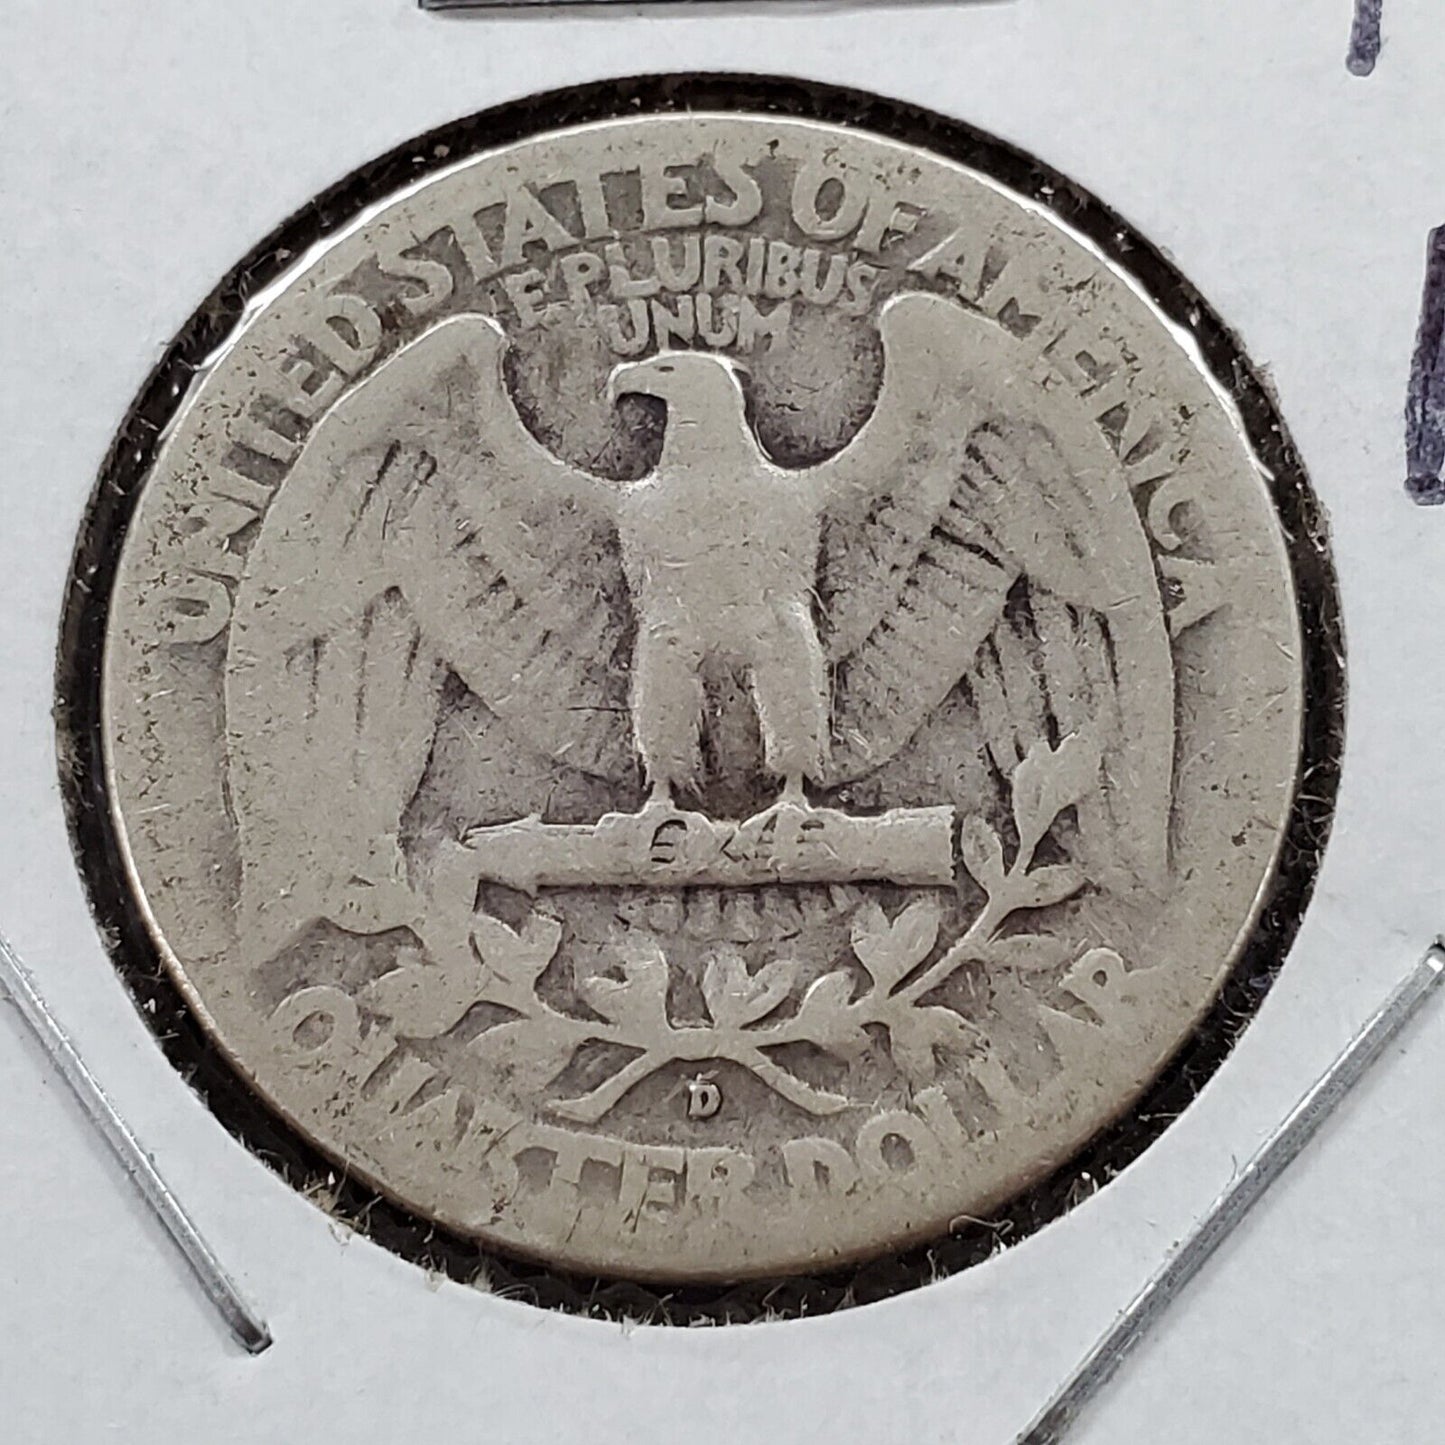 1941 D/D Washington Silver Quarter Coin RPM 003 Repunched mint mark #3